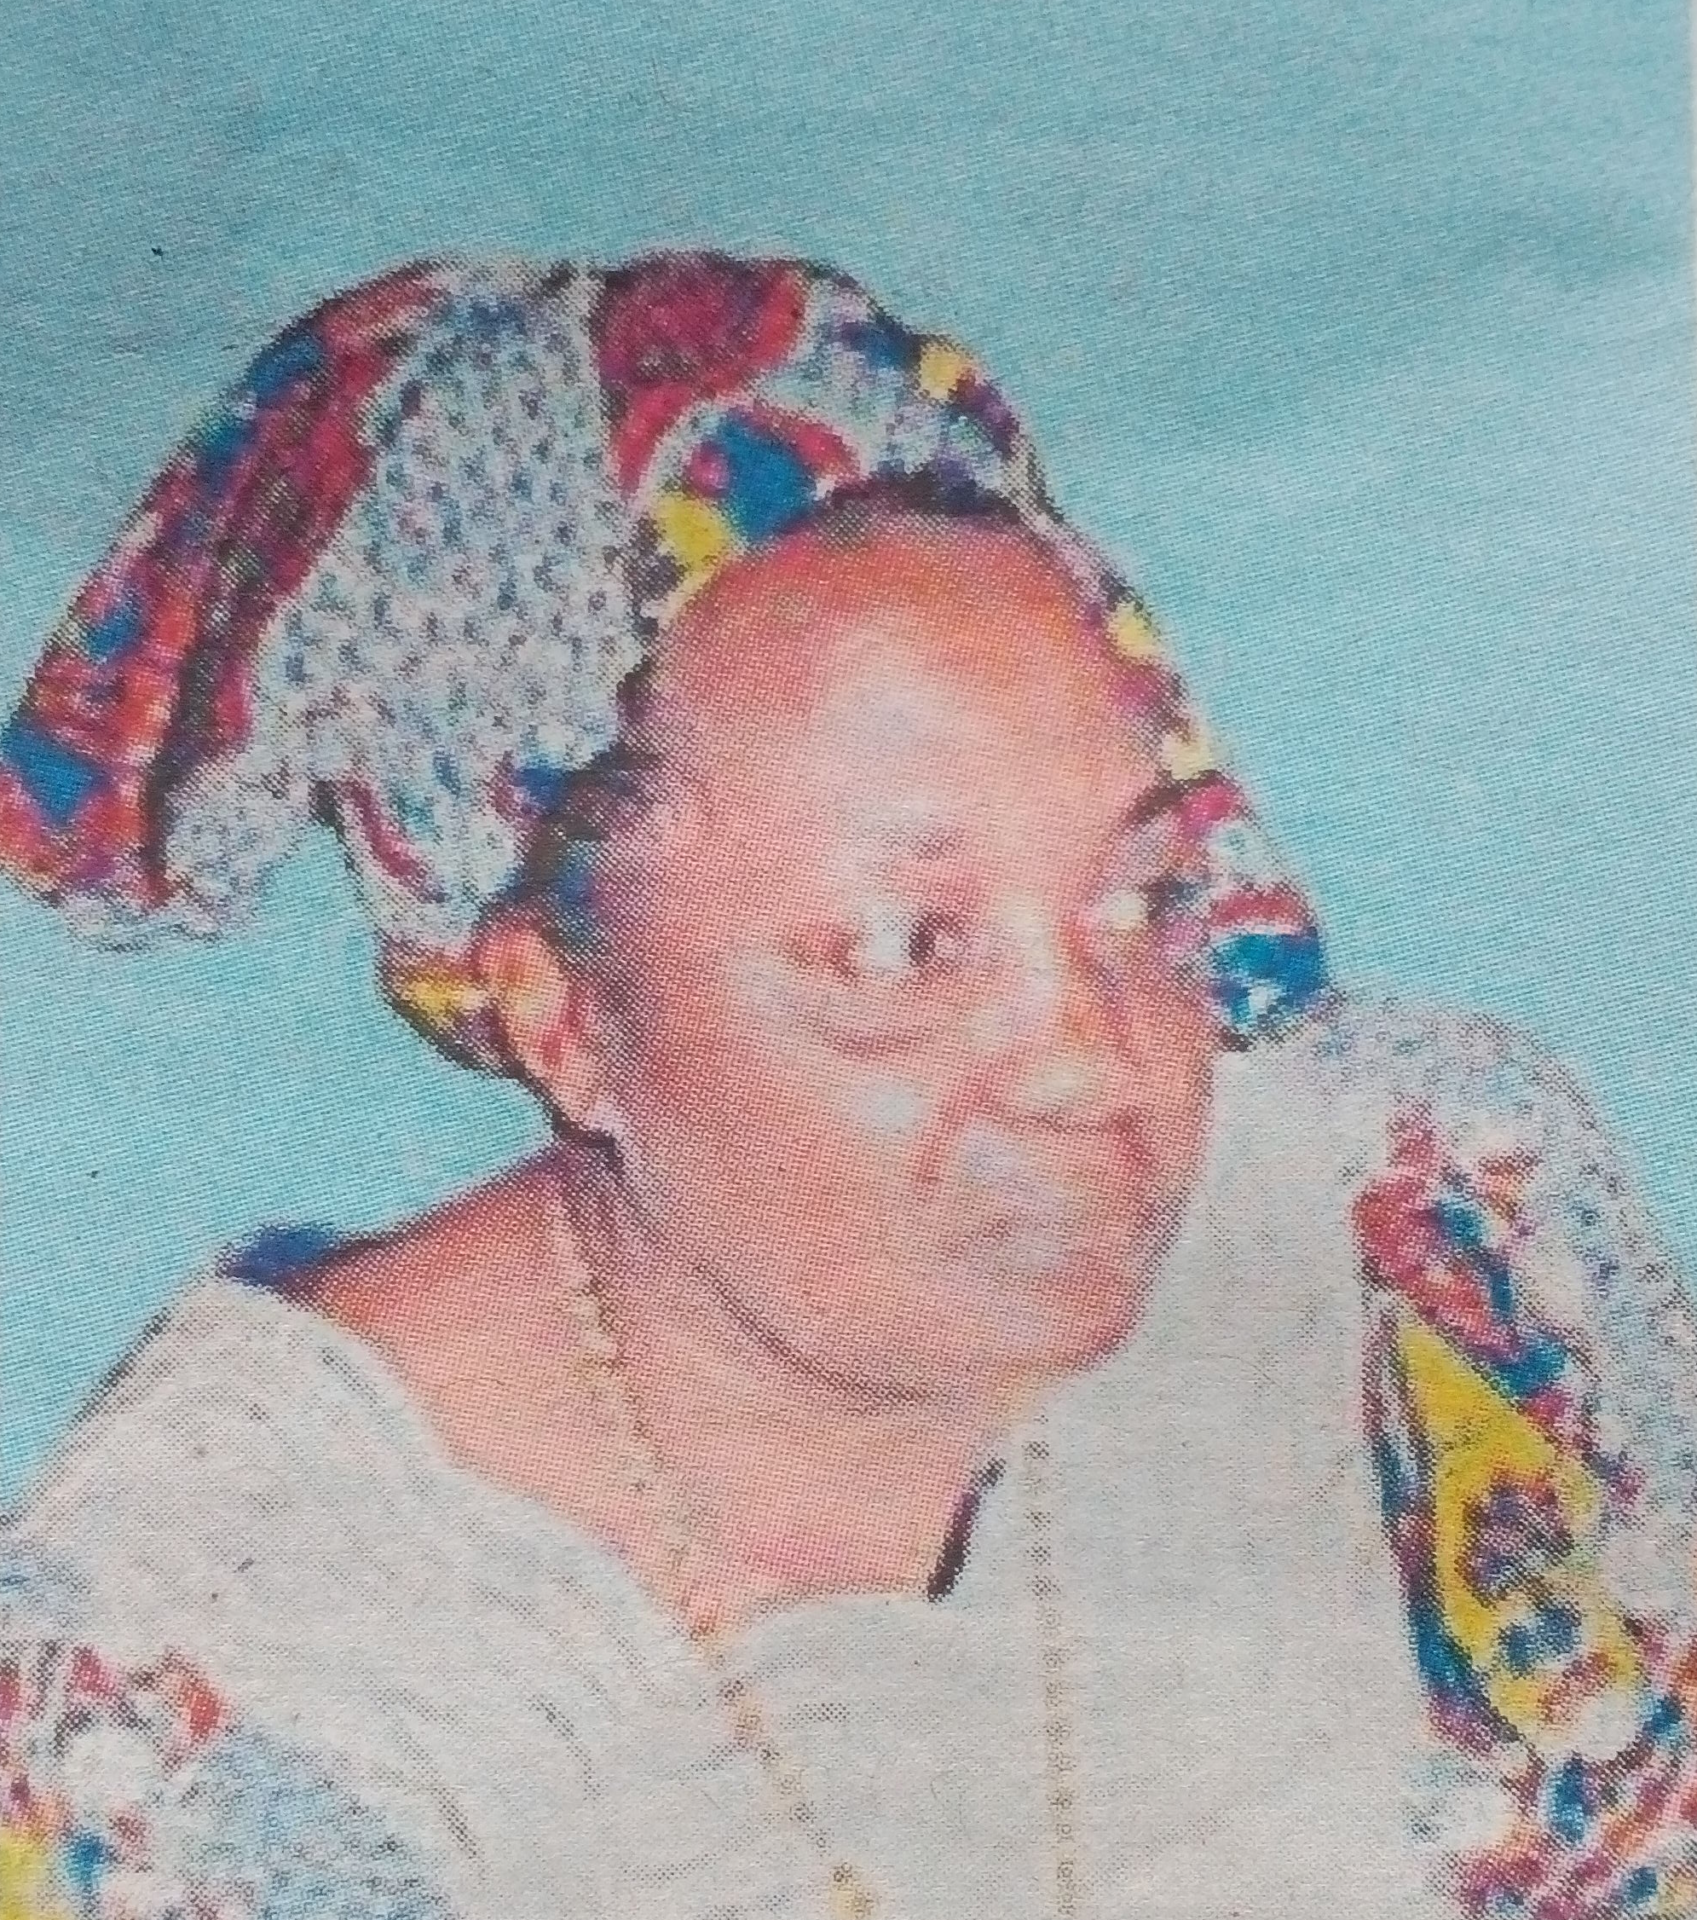 Obituary Image of Perpetua Wanjiru Macharia